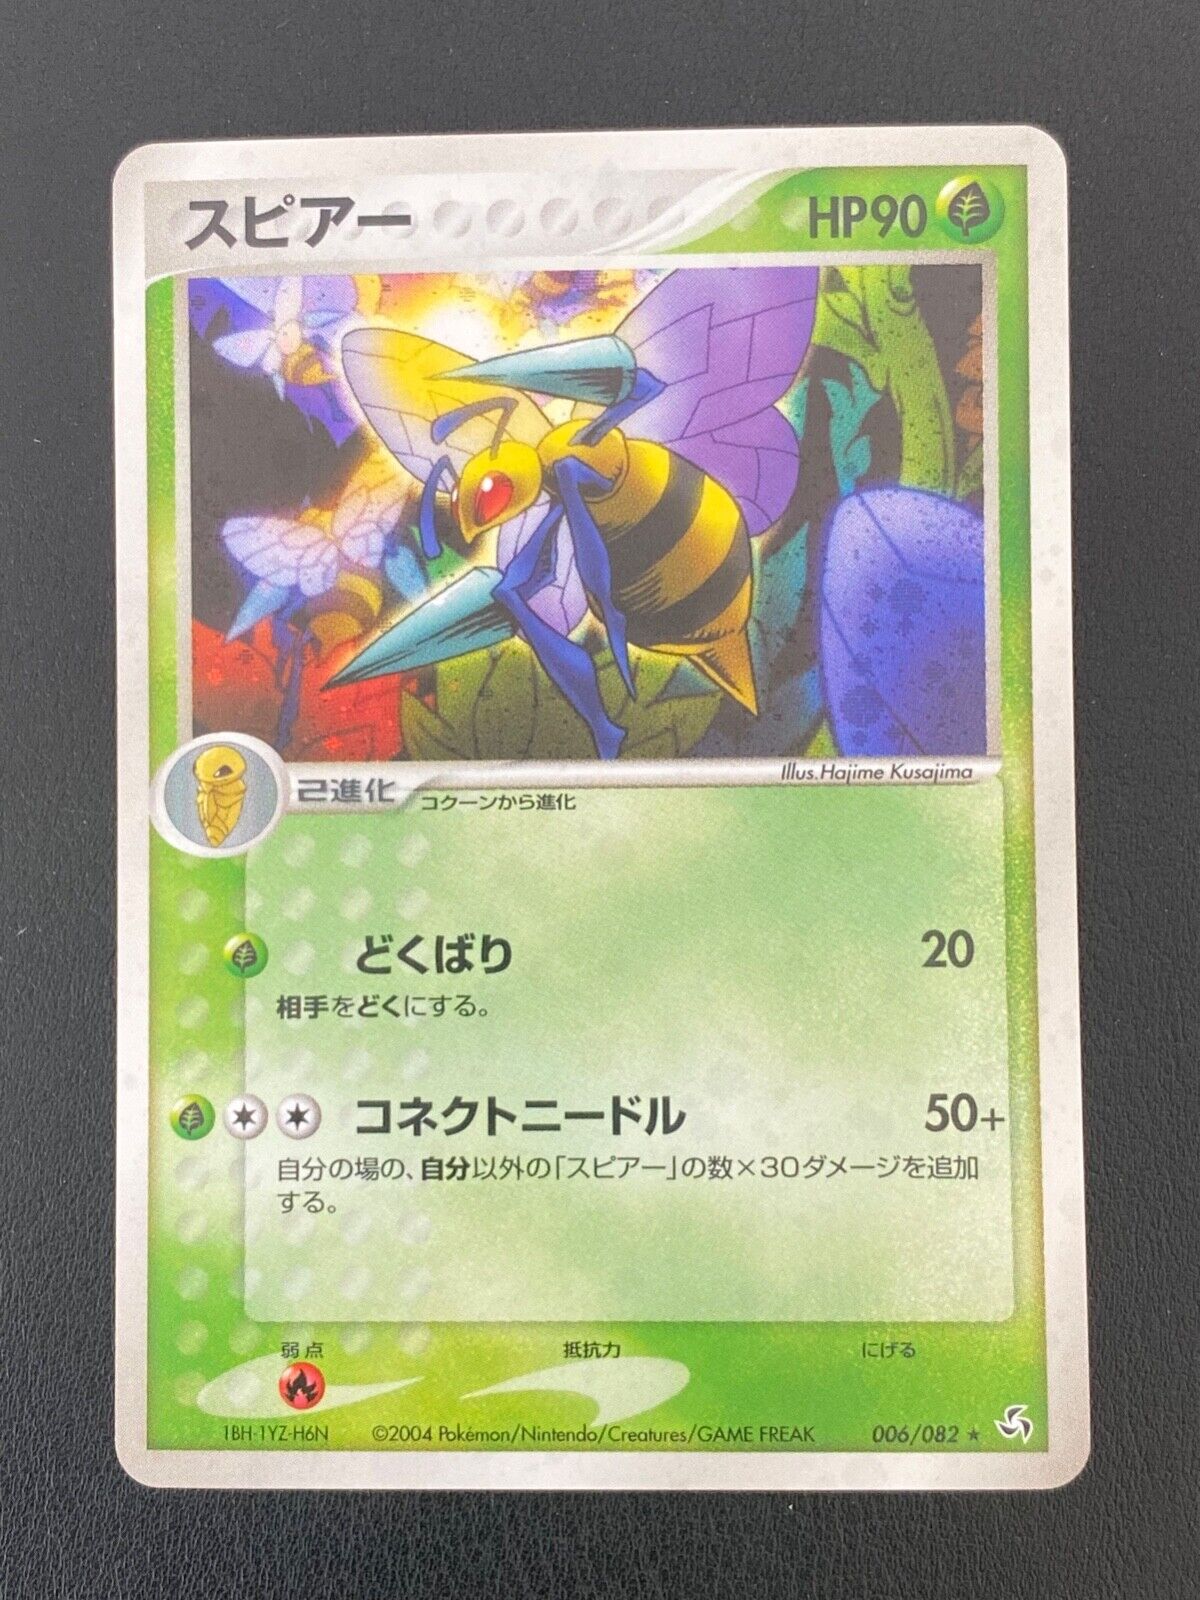 JAPANESE POKEMON CARD EX FR & LG - DARDARGNAN / BEEDRILL 006/082 HOLO - MINT